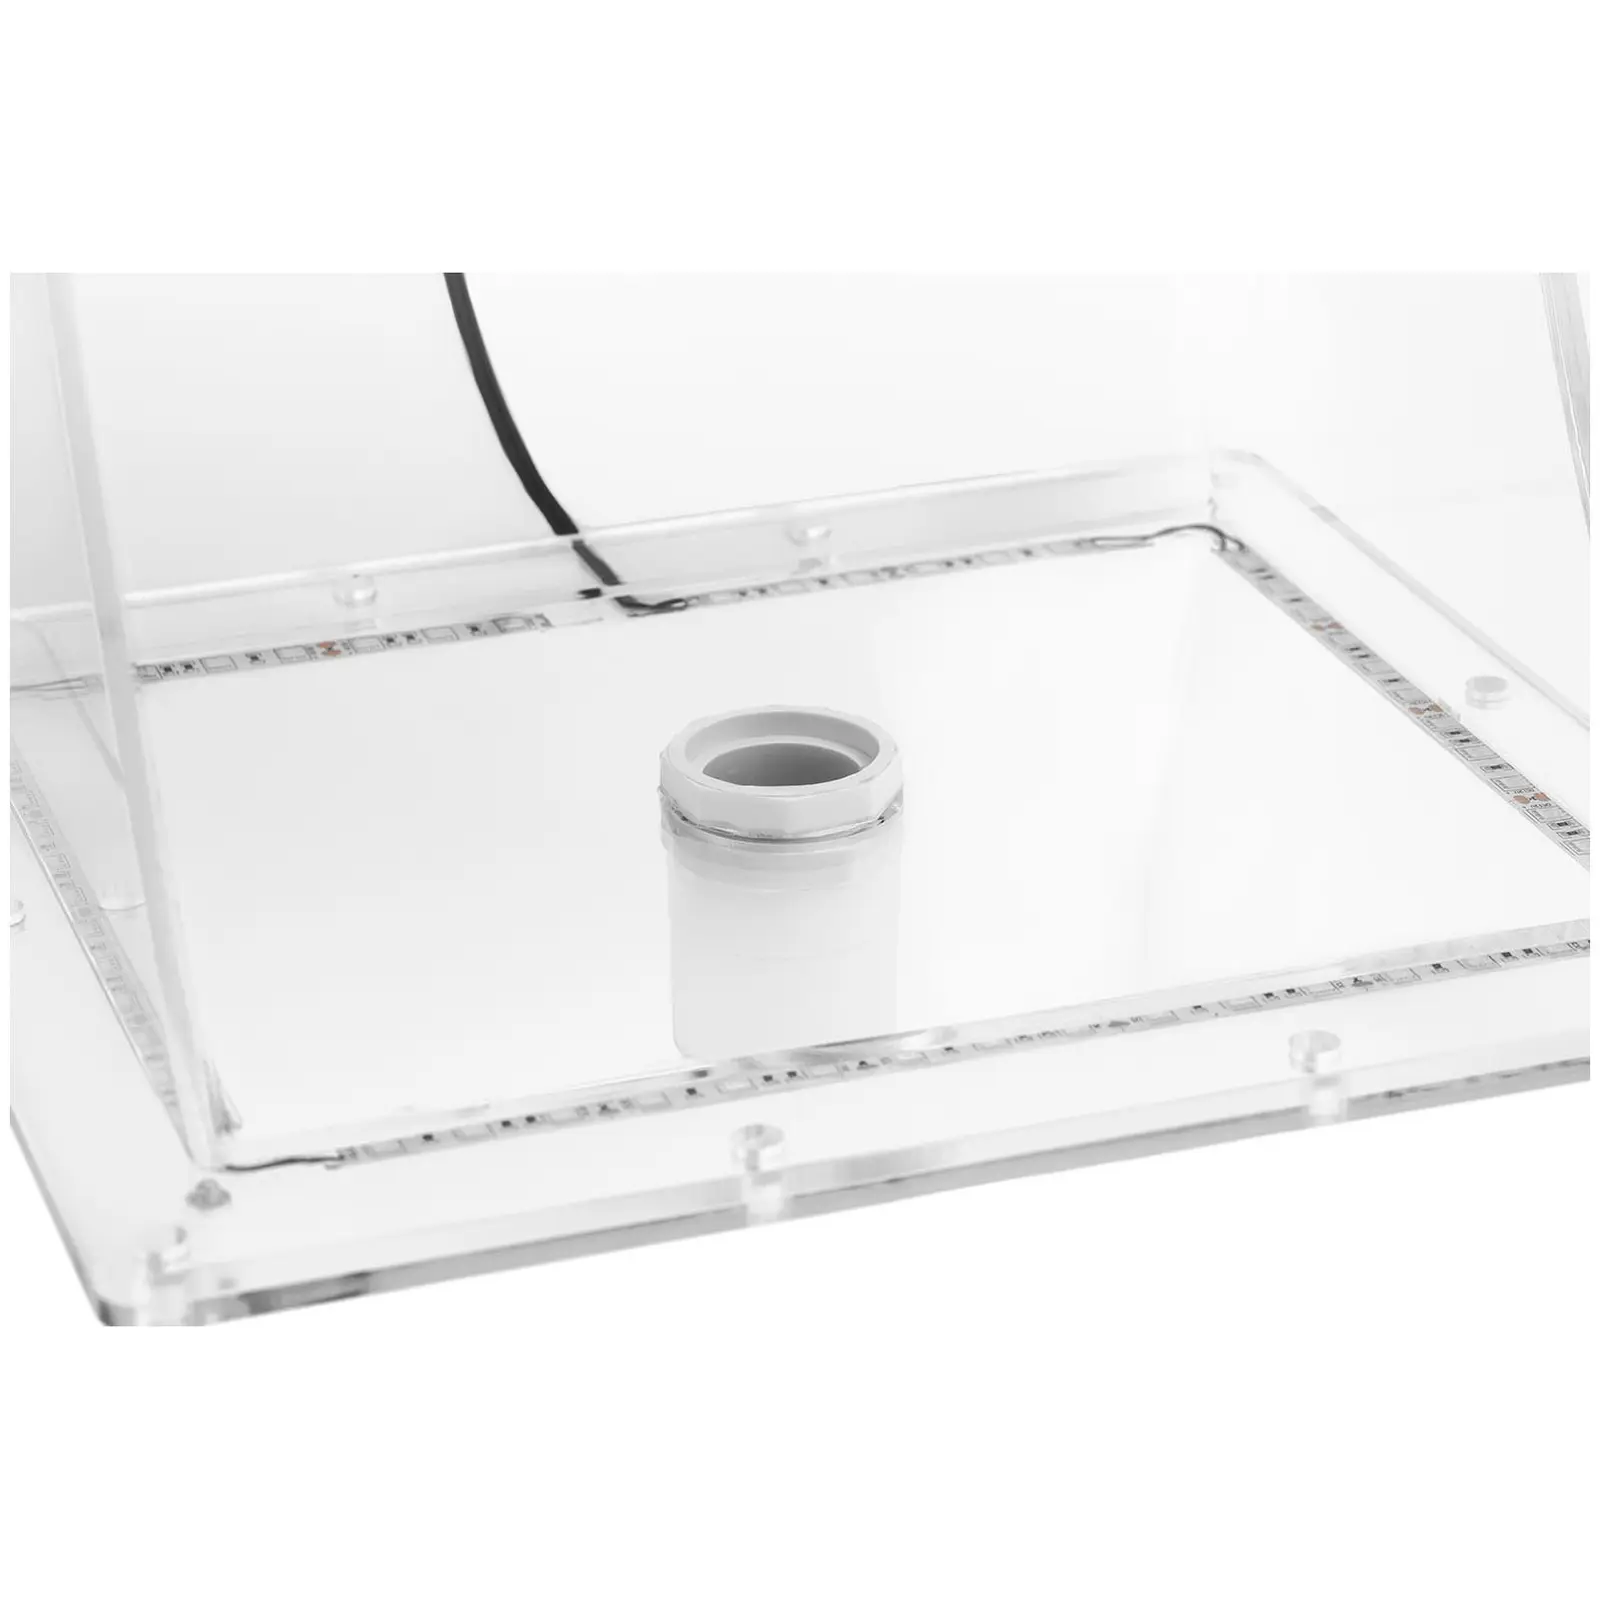 Vattenfall till pool - 35 cm - LED-belysning - Blå / vit